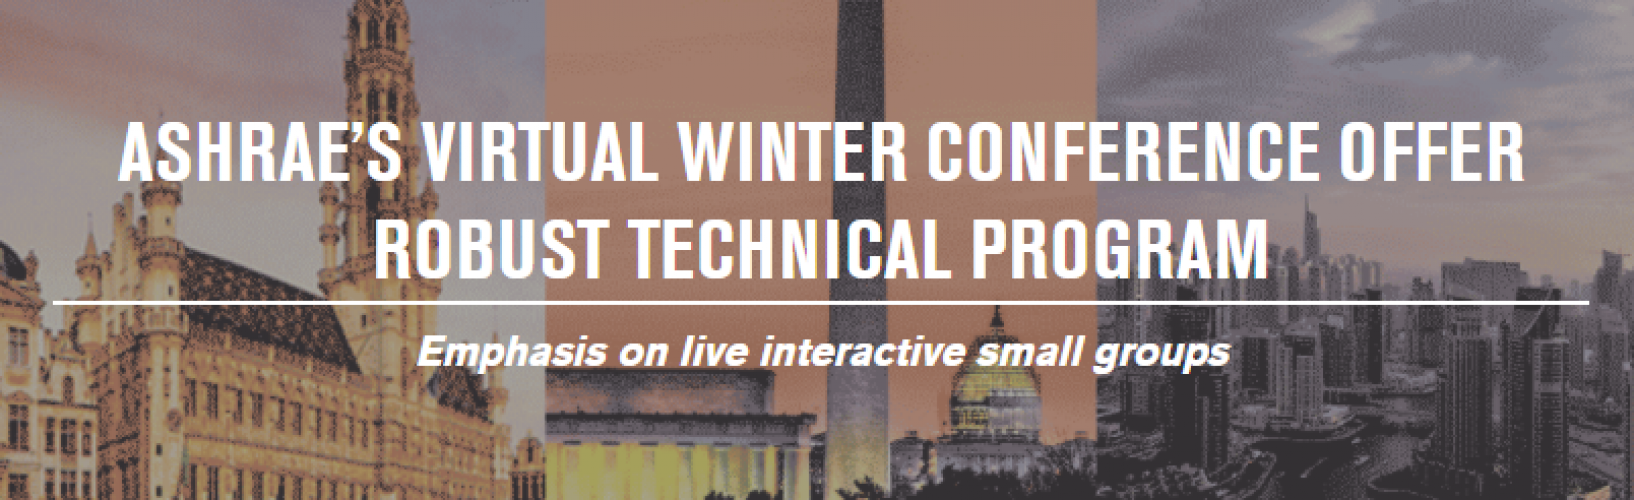 ASHRAE’s Virtual Winter Conference Offer Robust Technical Program